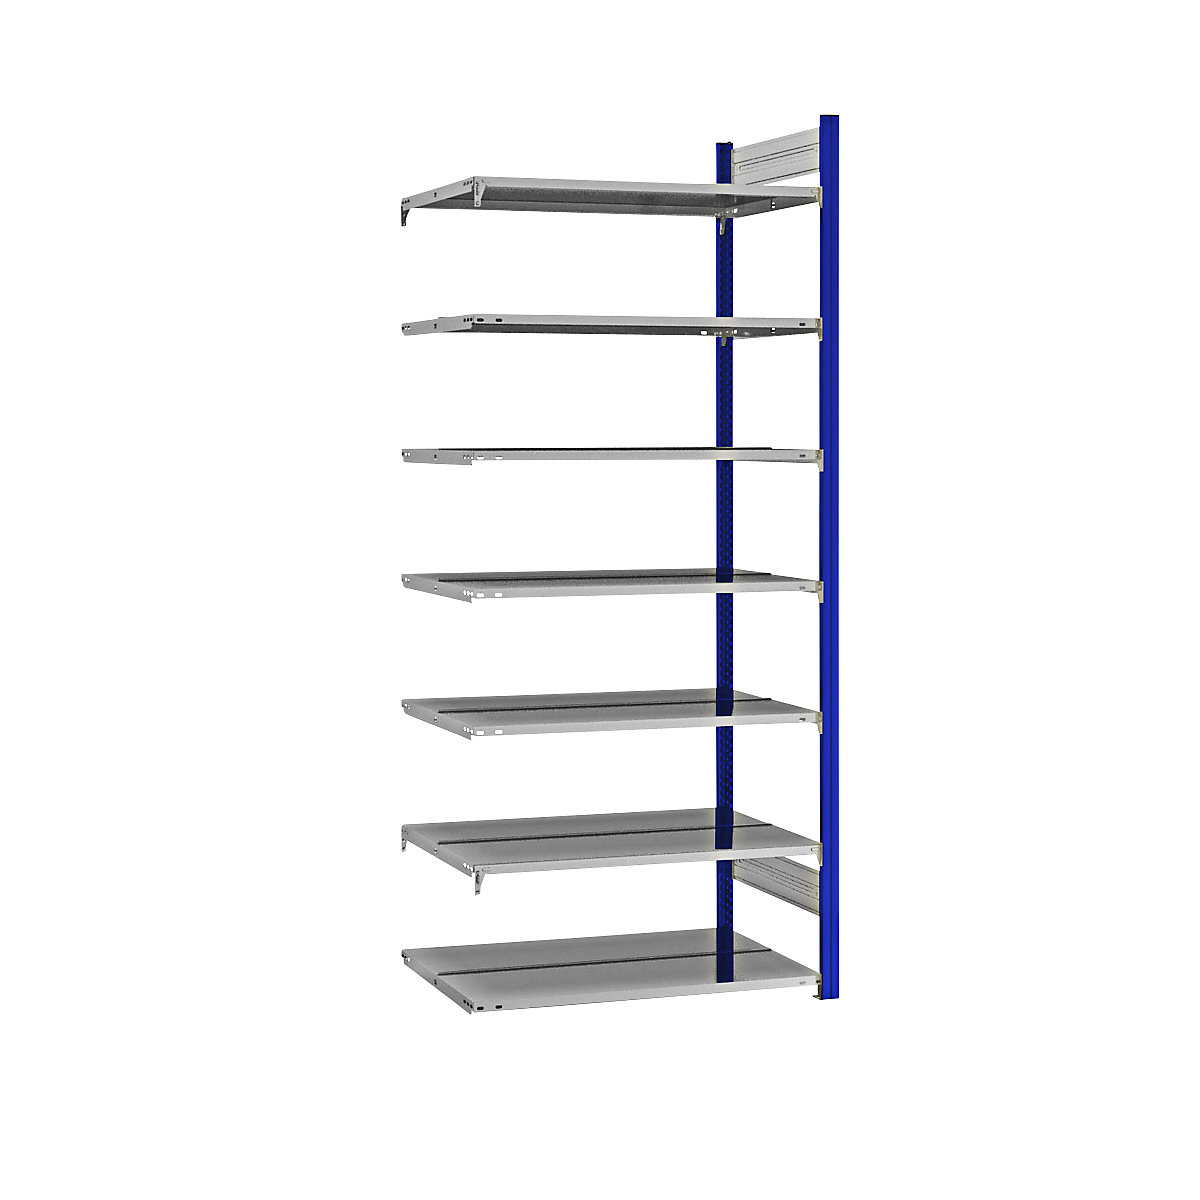 Ordner-inhaakstelling – hofe, dubbelzijdig, hoogte 2350 mm, b x d = 1000 x 600 mm, aanbouwstelling, blauw/verzinkt-8